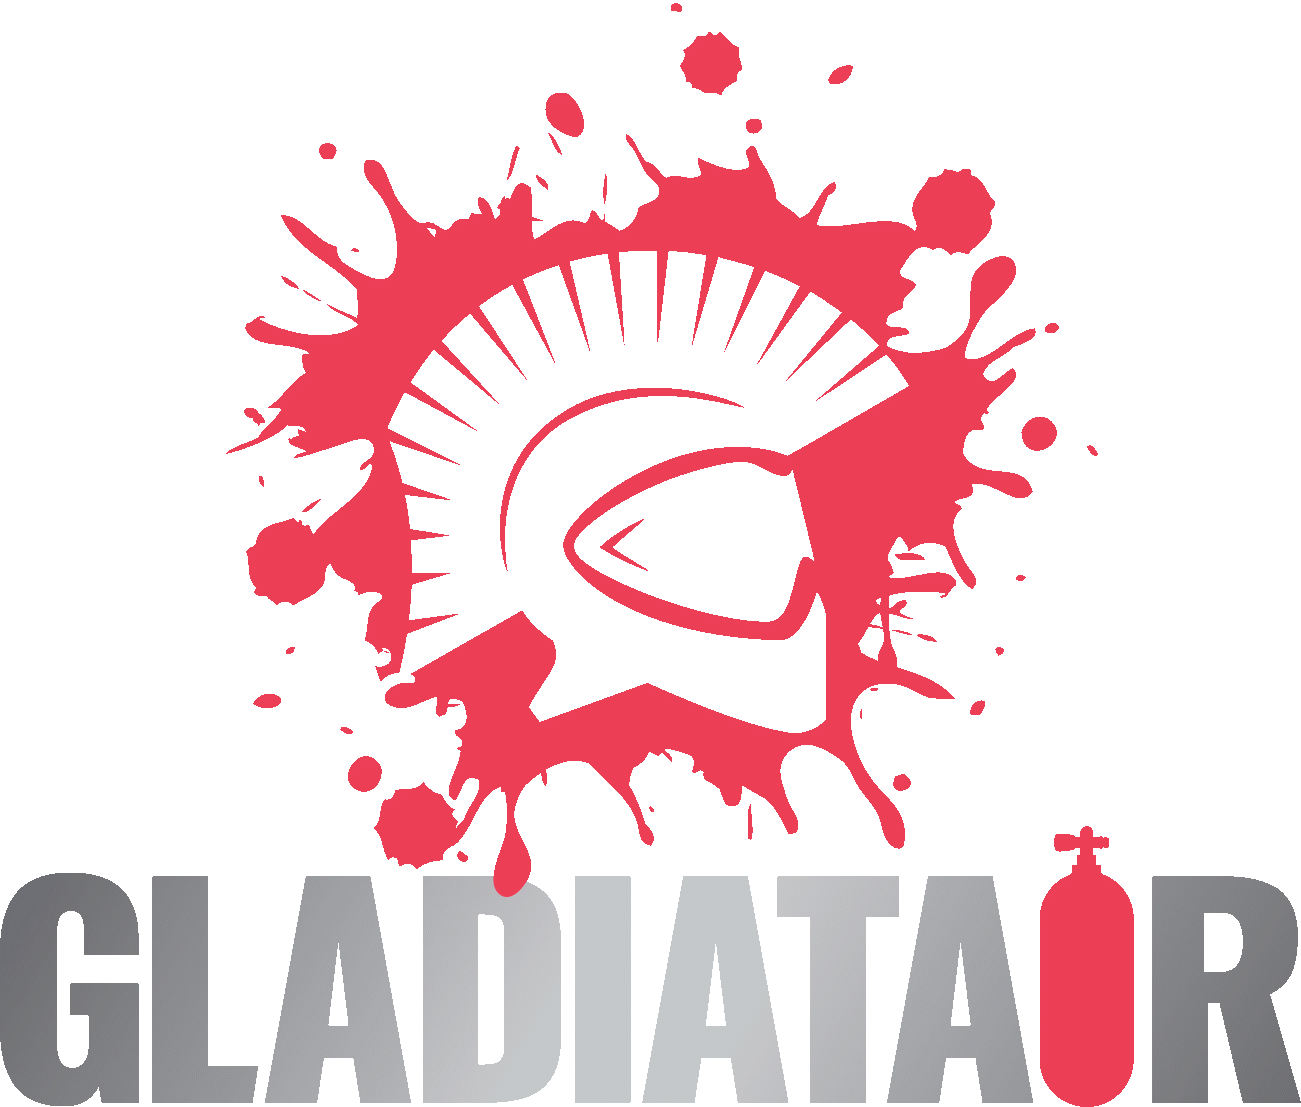 Gladiatair Aus made paintball and gel blaster HPA tanks. High quality Alloy, Carbon, U48, U88, U68, 